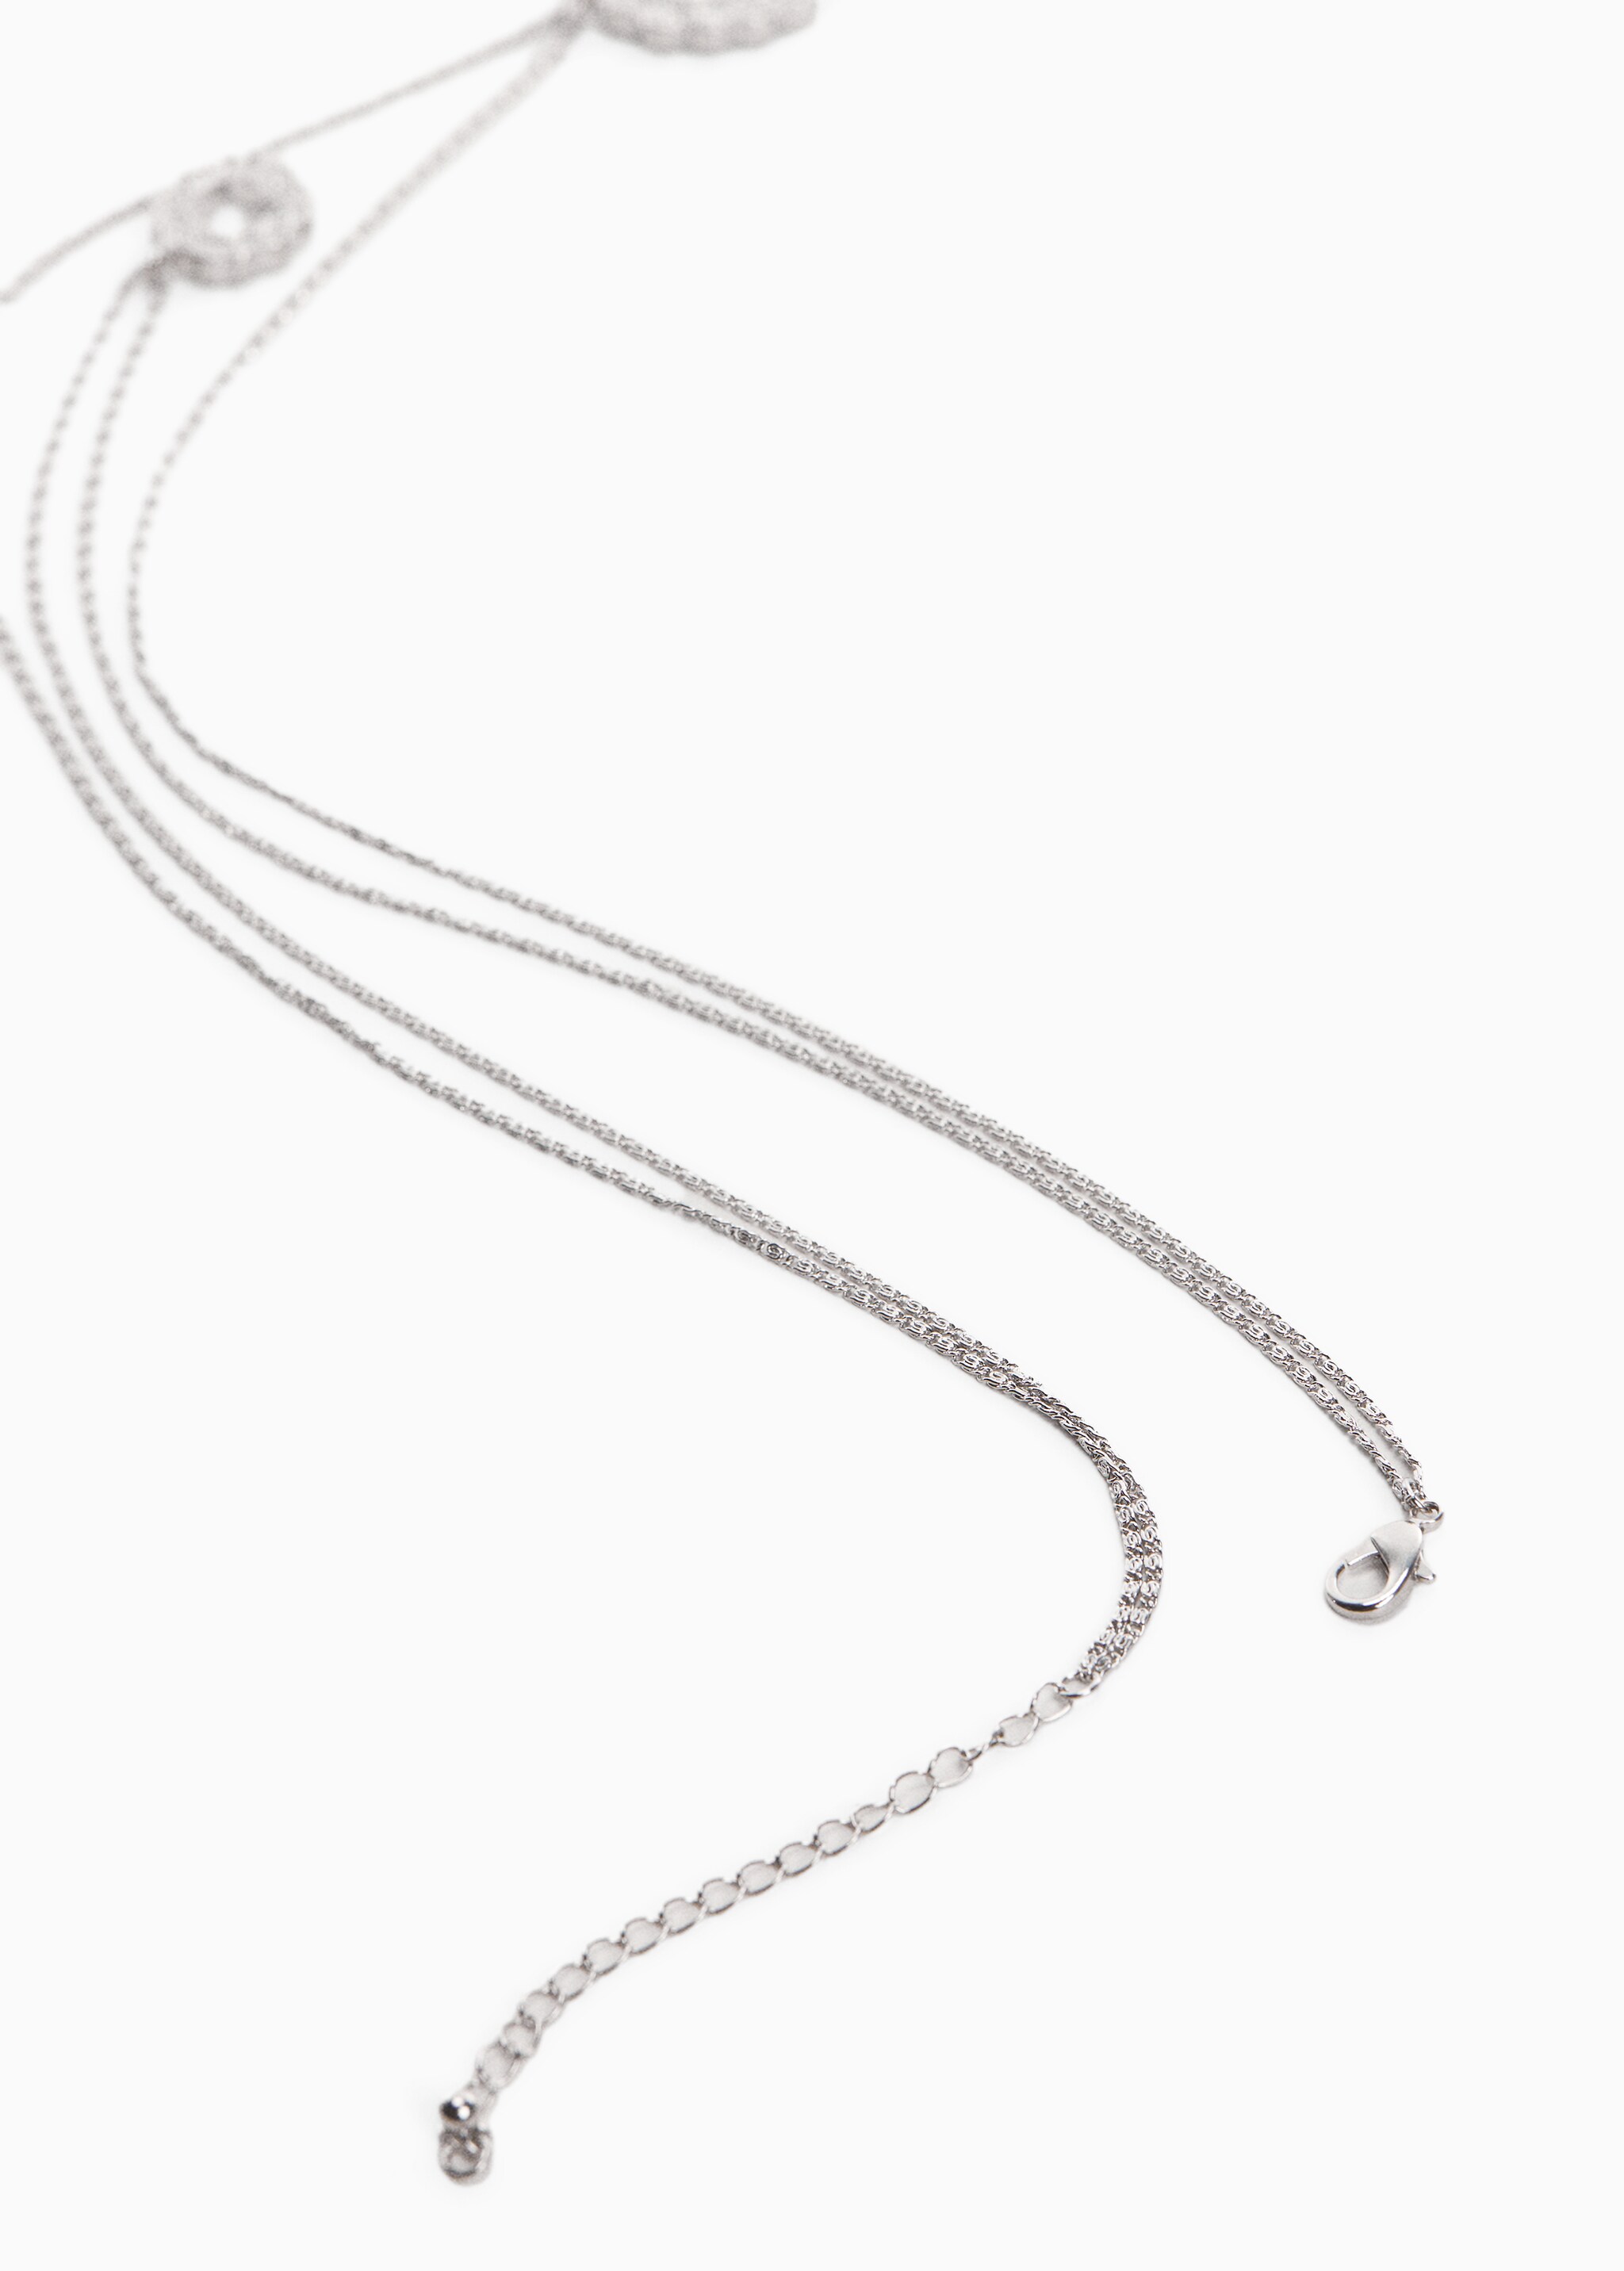 Pendant double necklace - Details of the article 1